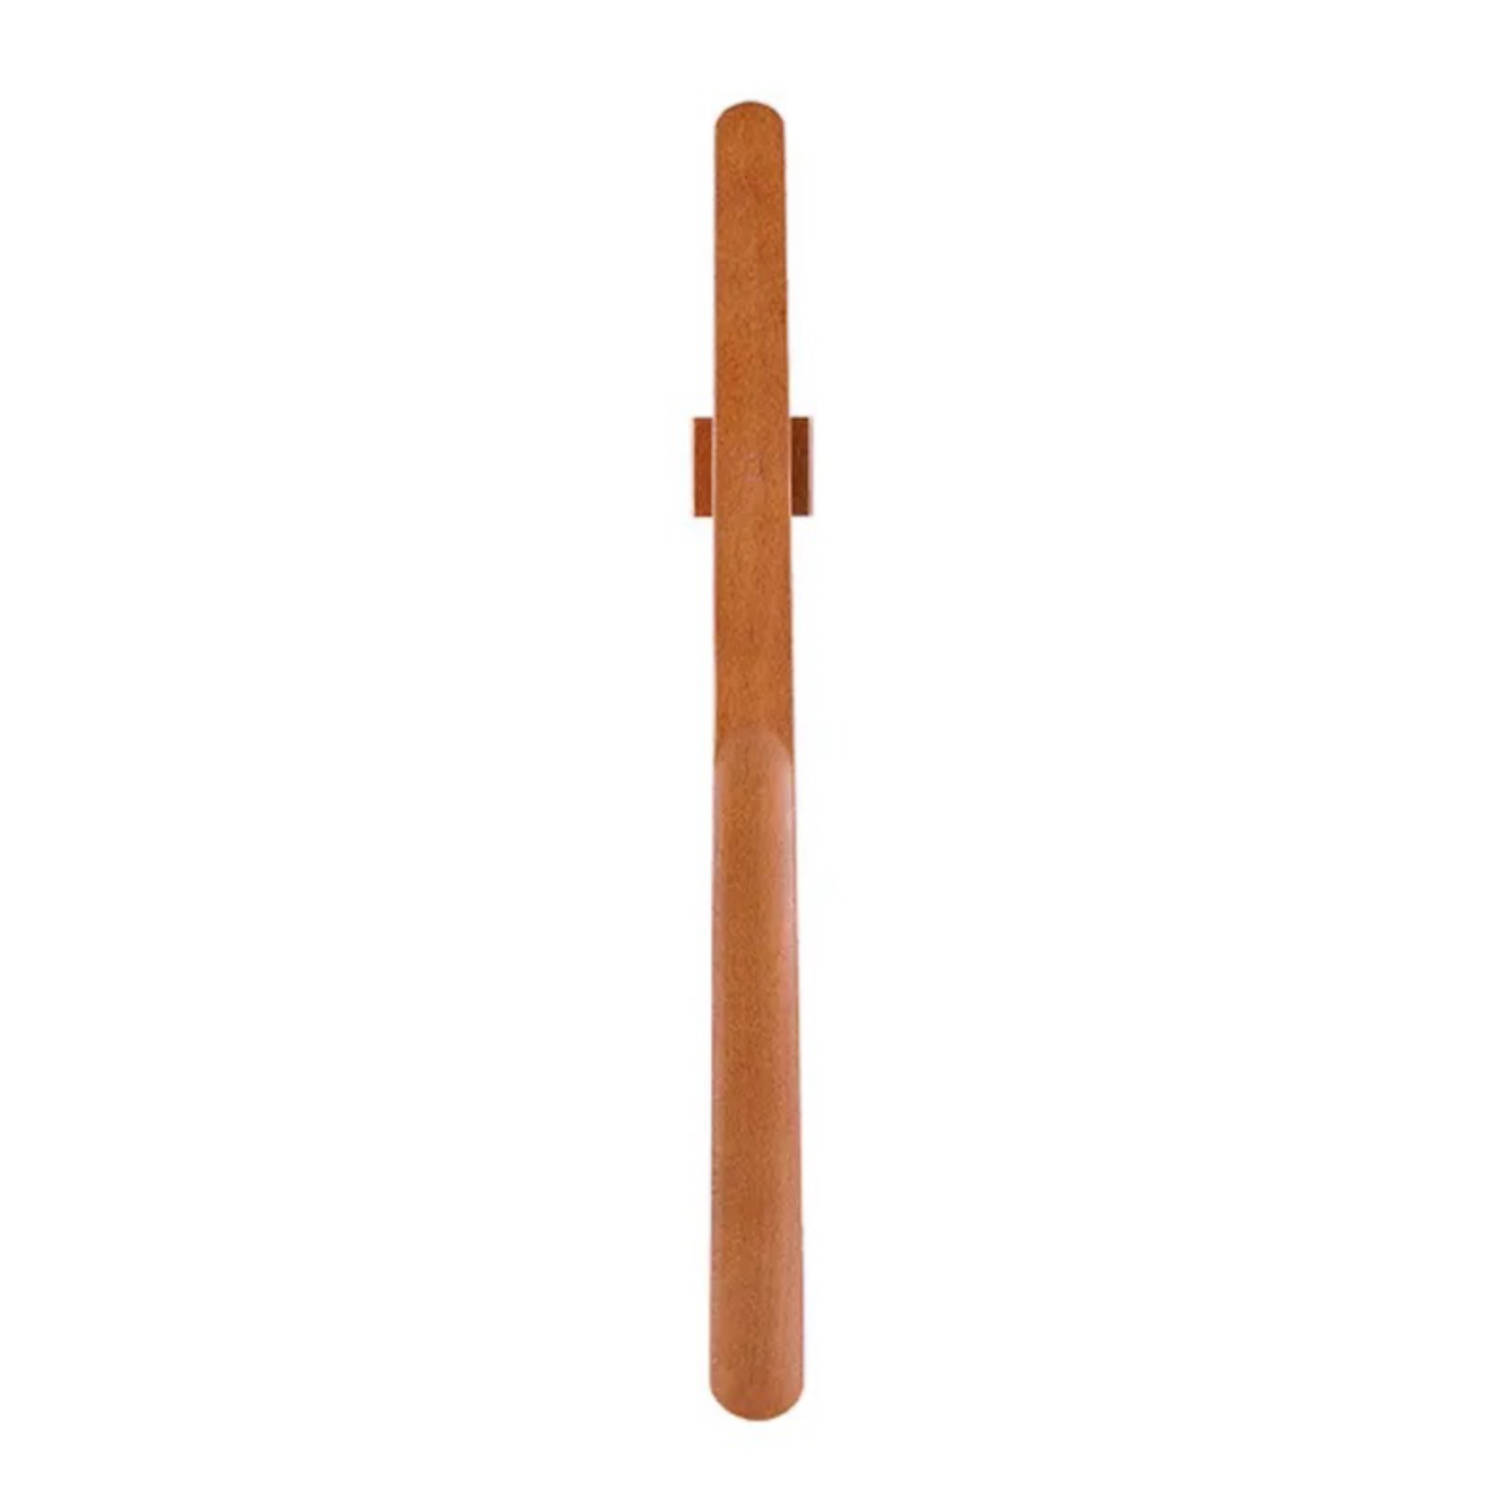 Schoenlepel hout licht eiken met magnetisch ophang basis wandmontage – 55cm